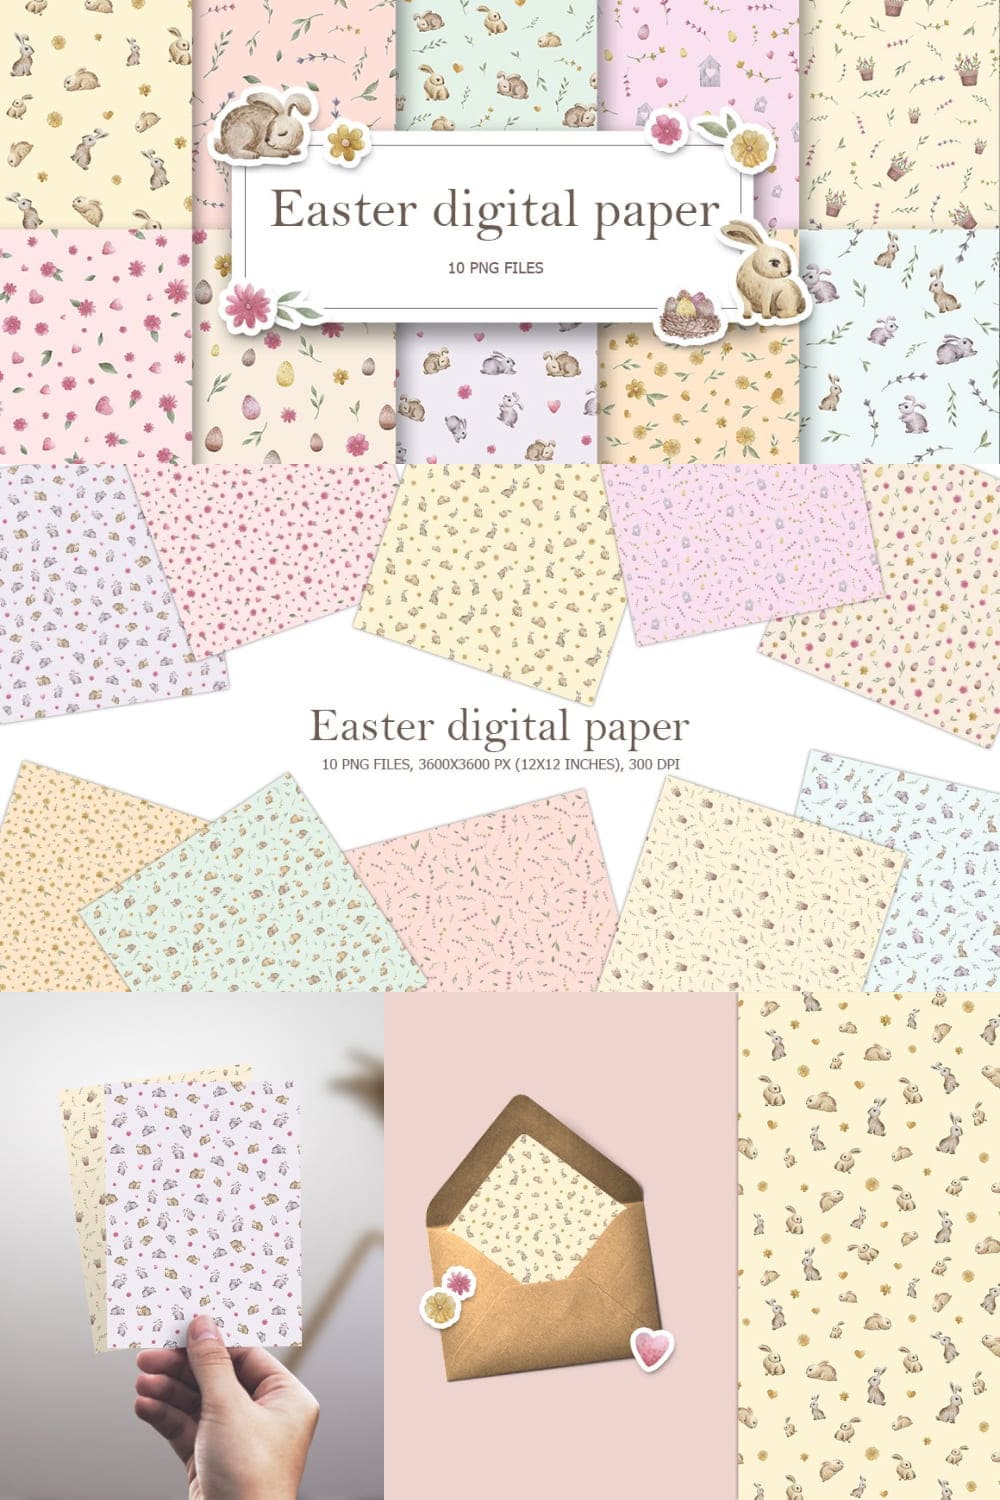 Easter digital paper pack - pinterest image preview.